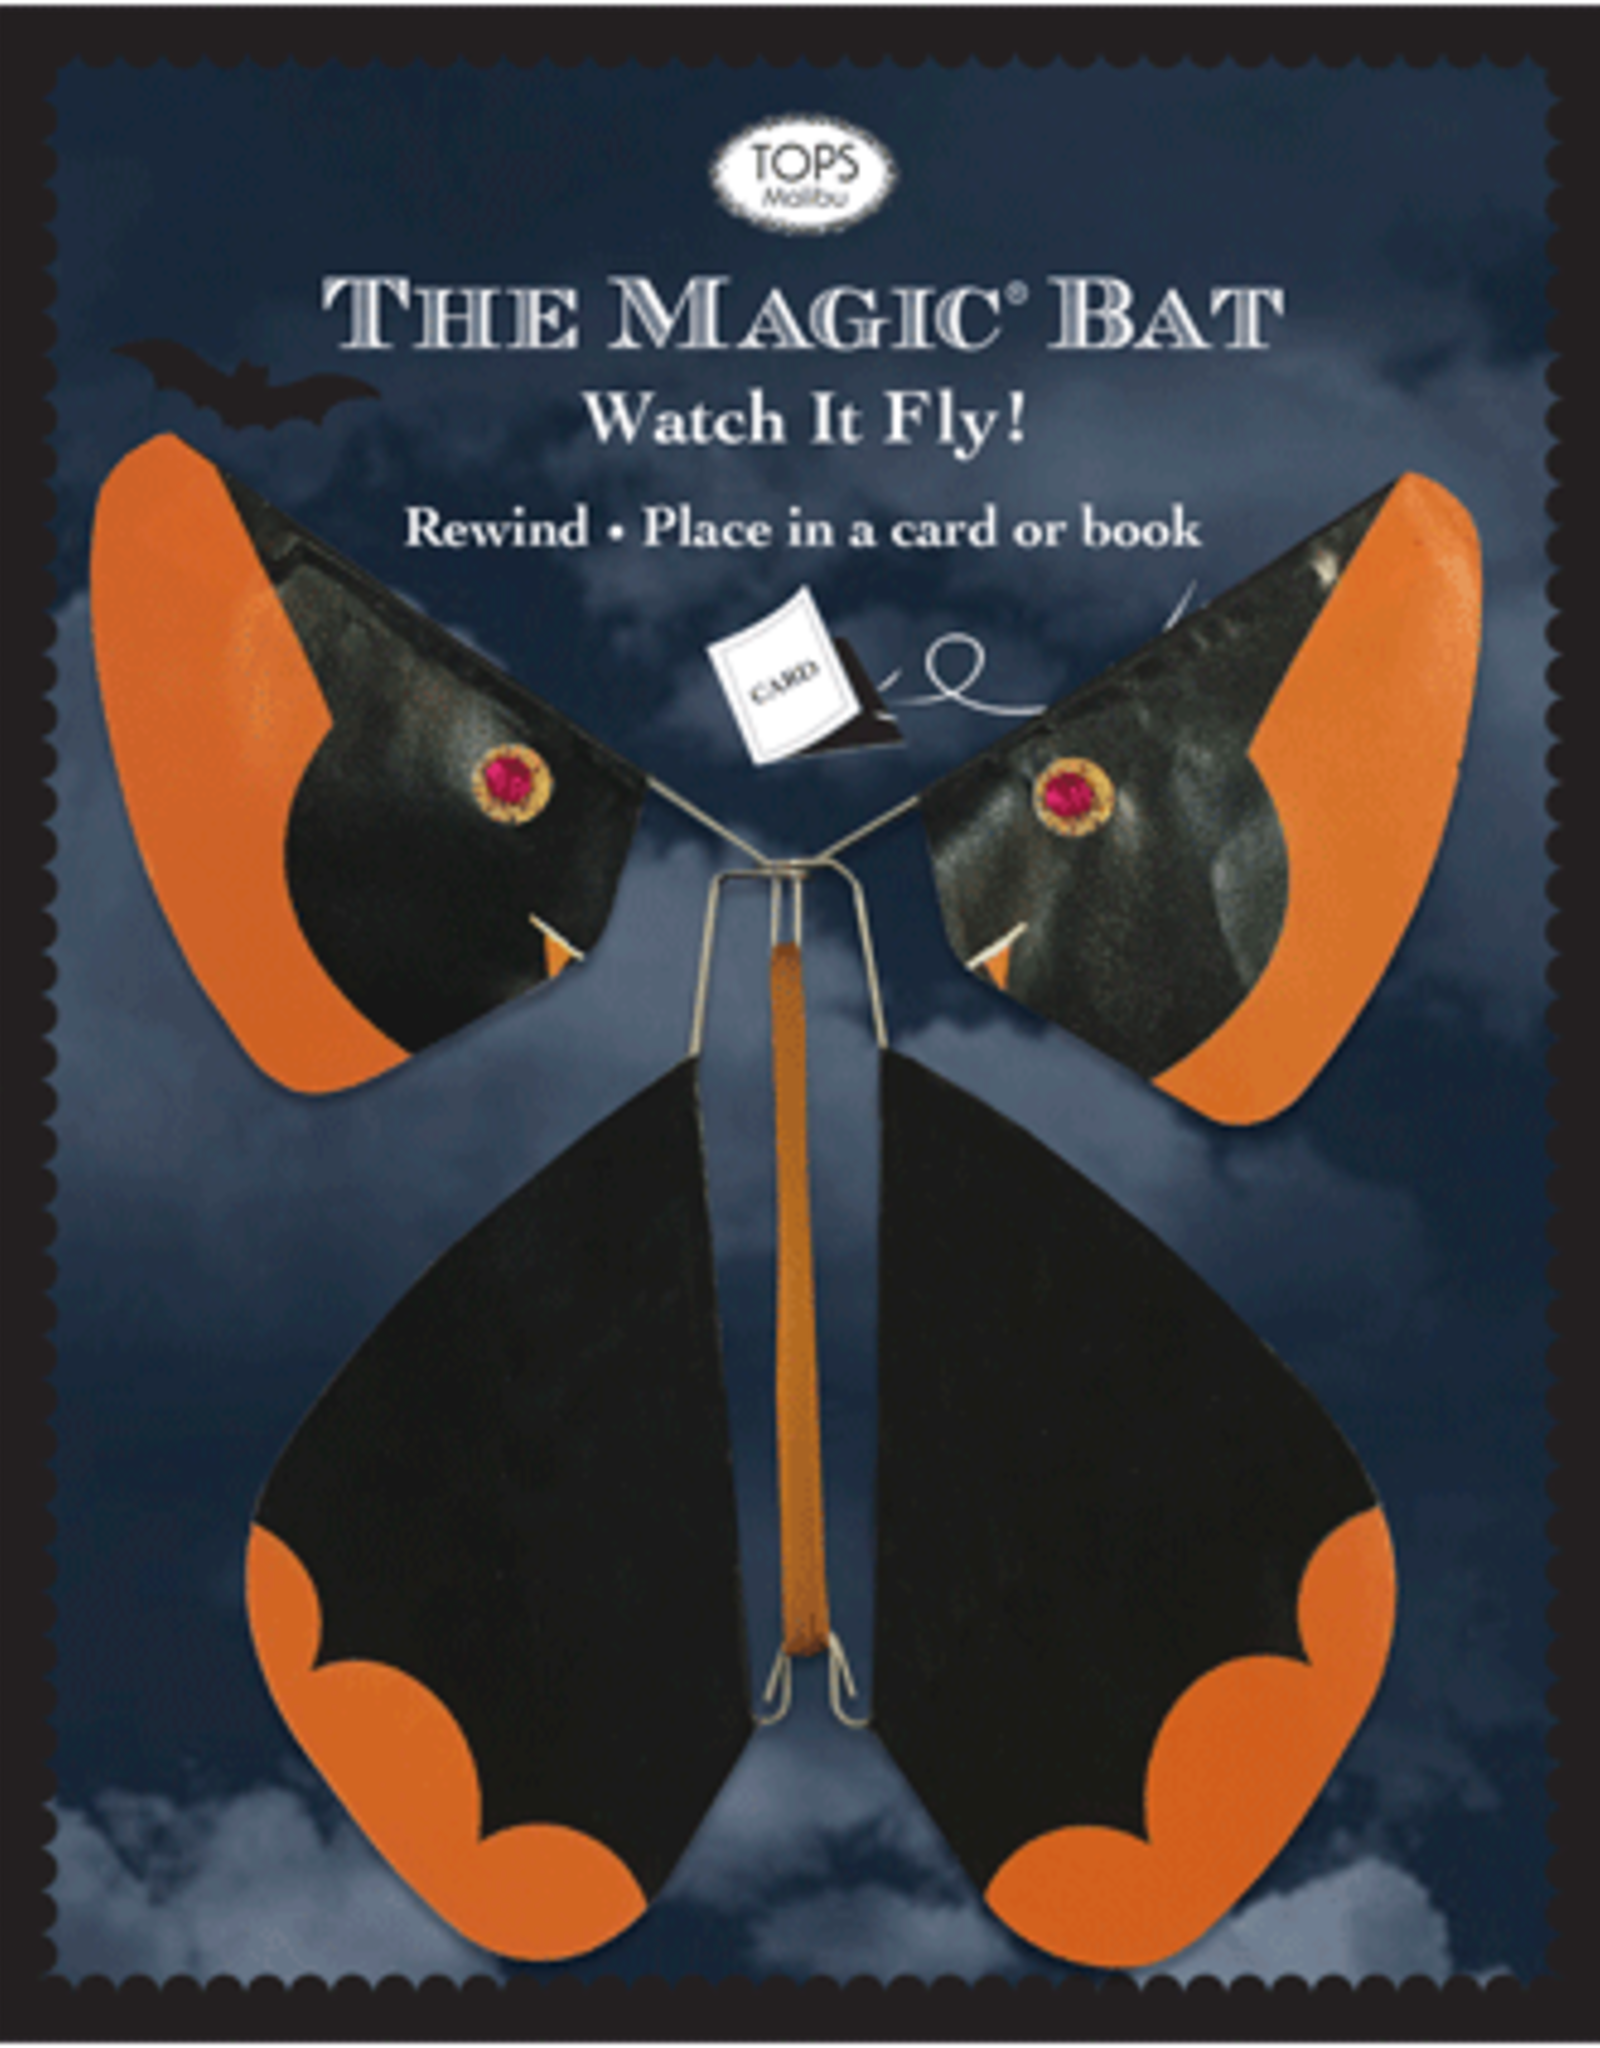 TOPS Malibu Flying Magic Bat